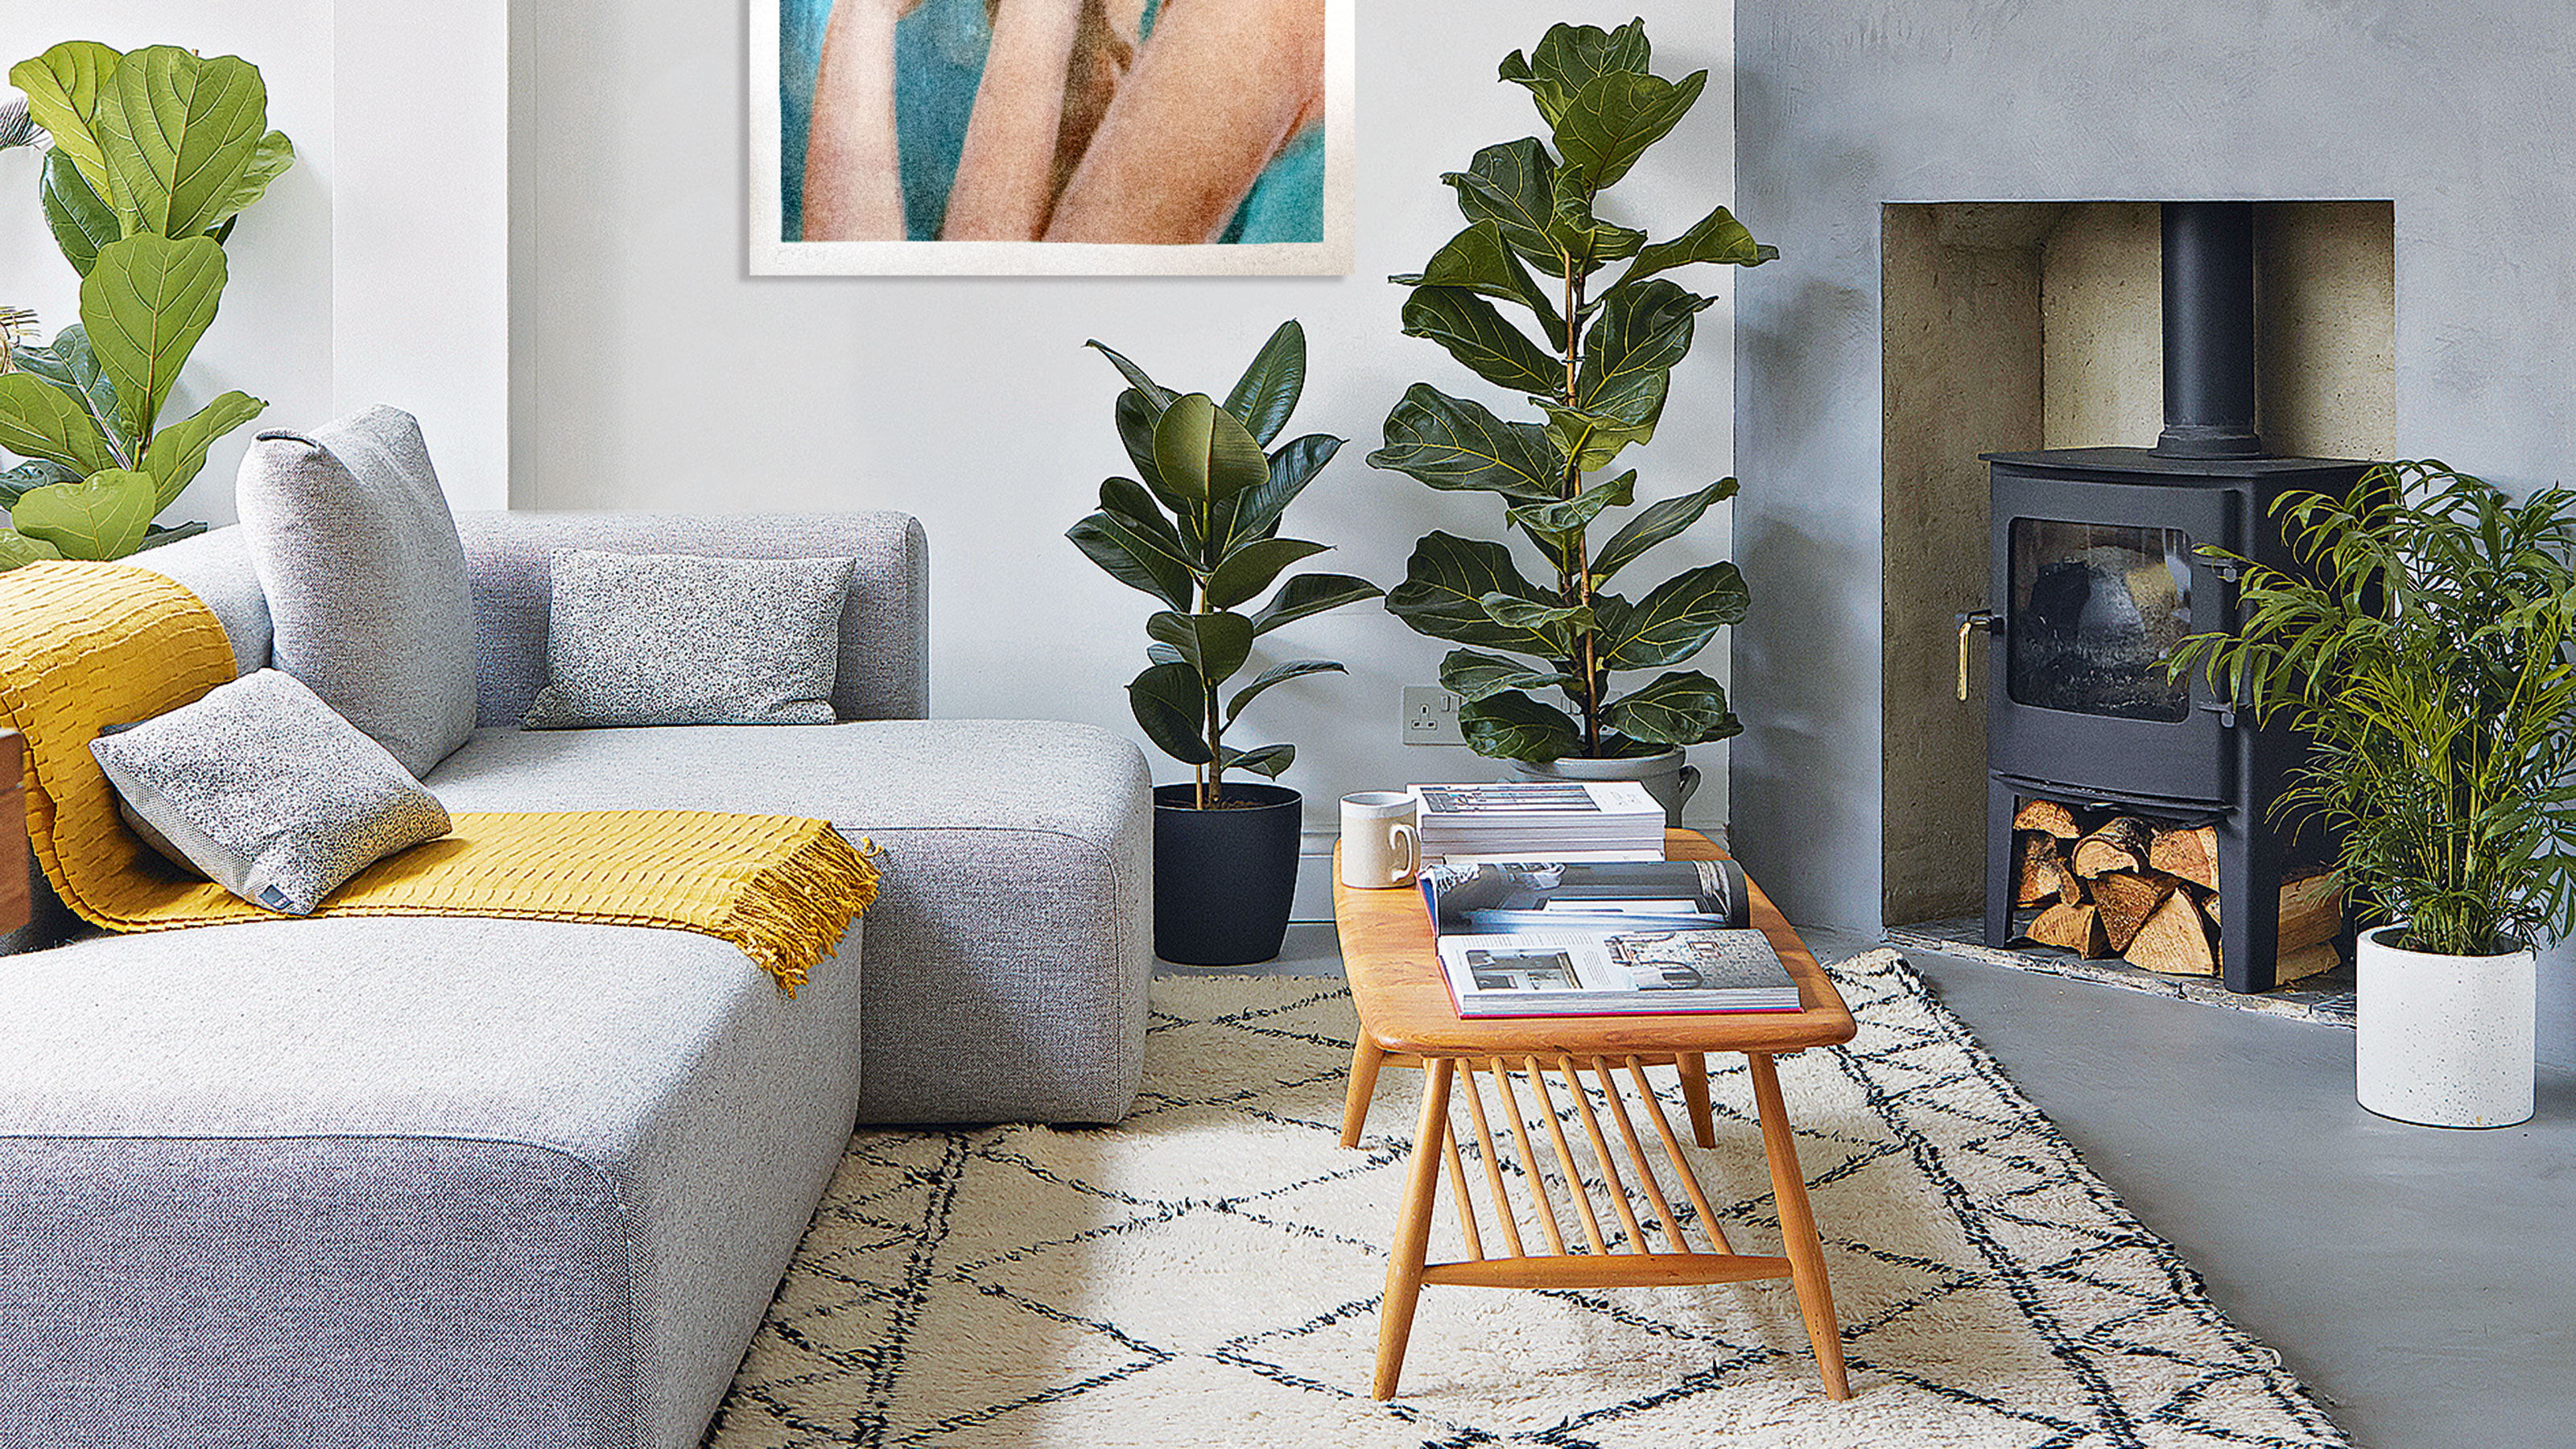 ledematen ziek Vegetatie Grey couch living room ideas – 10 ways to style this decor | Livingetc